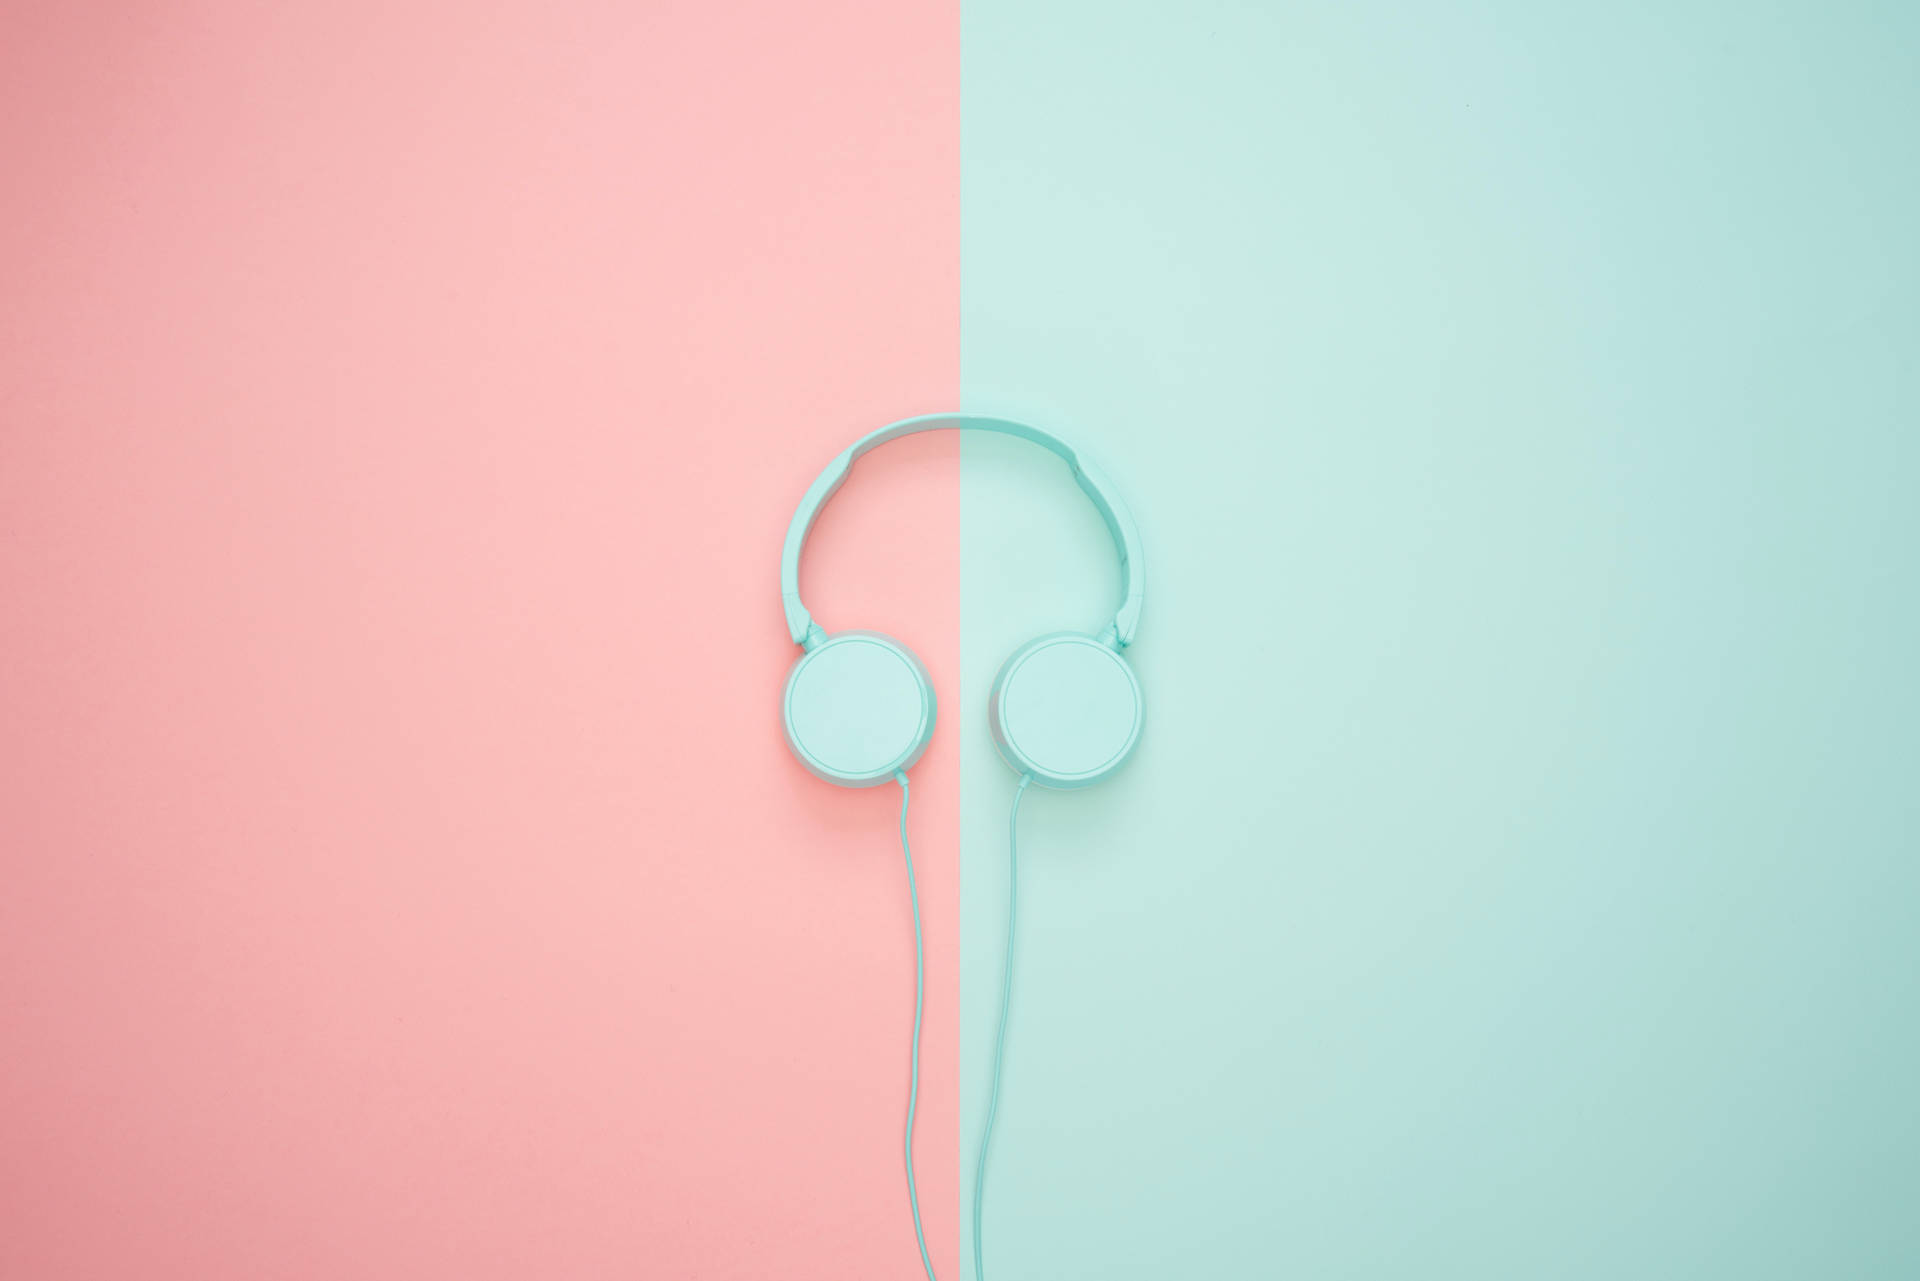 Cute Pastel Aesthetic Blue Headphone Background